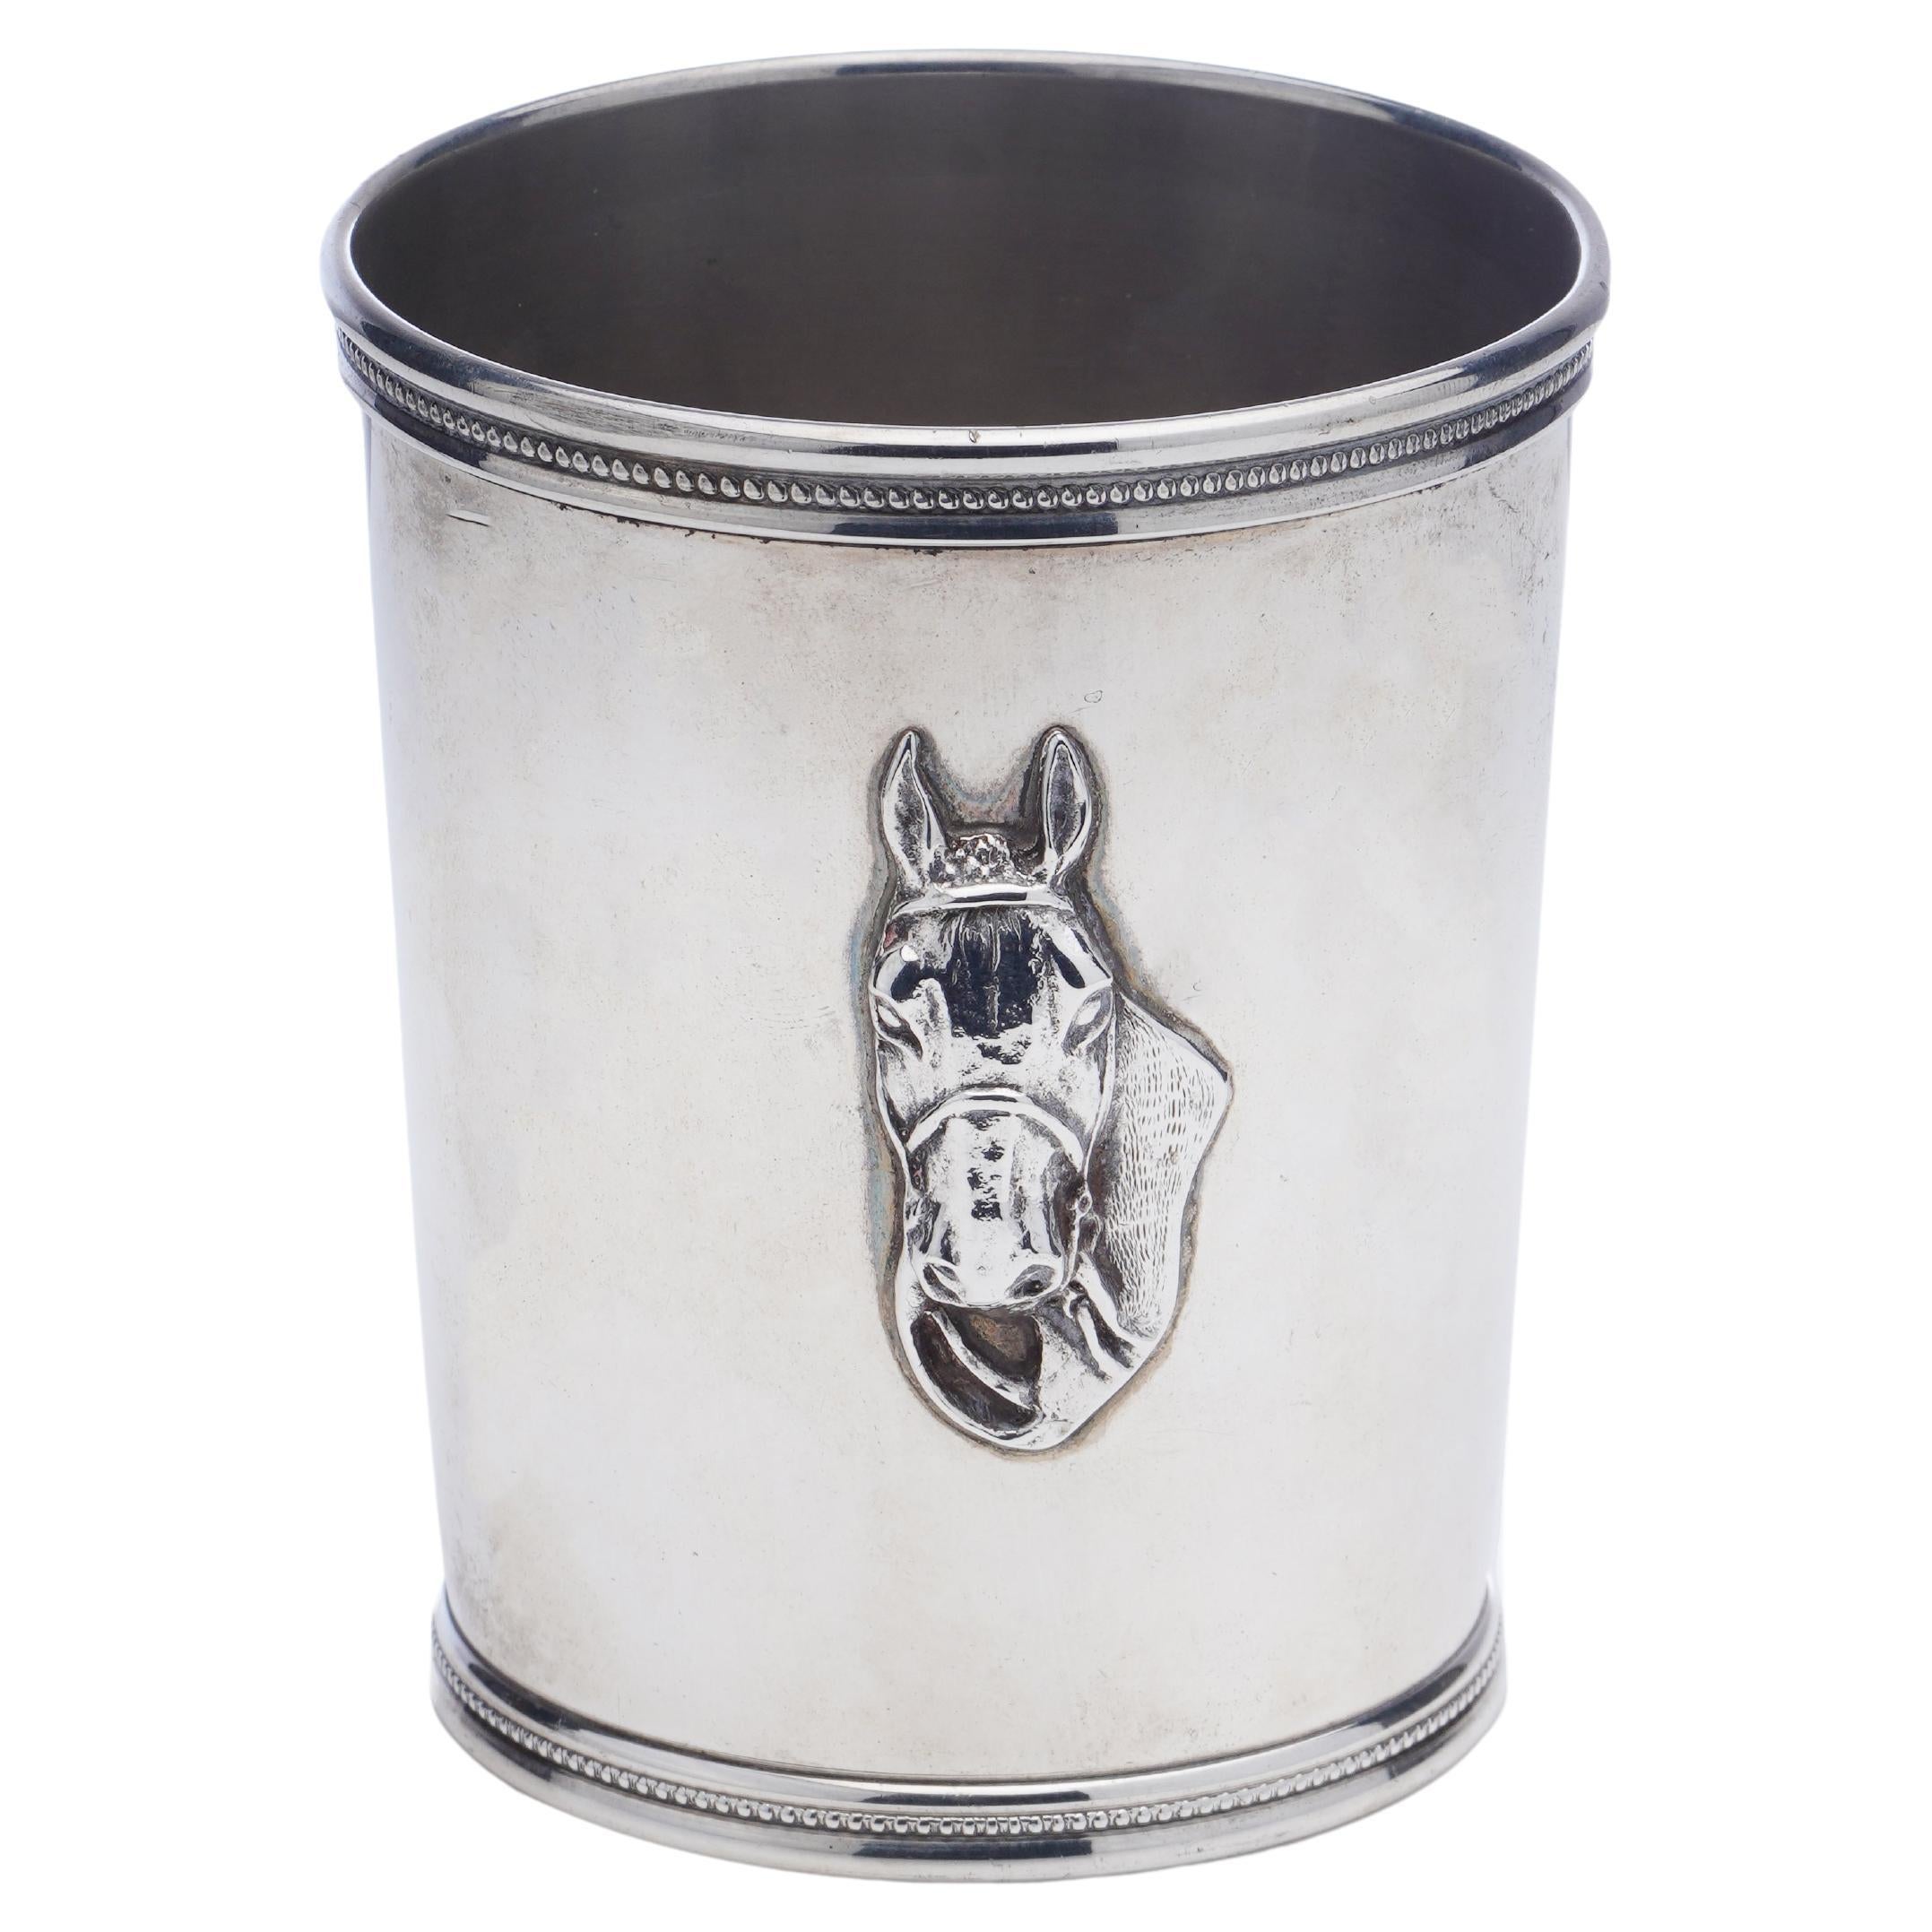 Benjamin Trees Silver Mint Julep Cup Beaker with Embossed Horse's Head